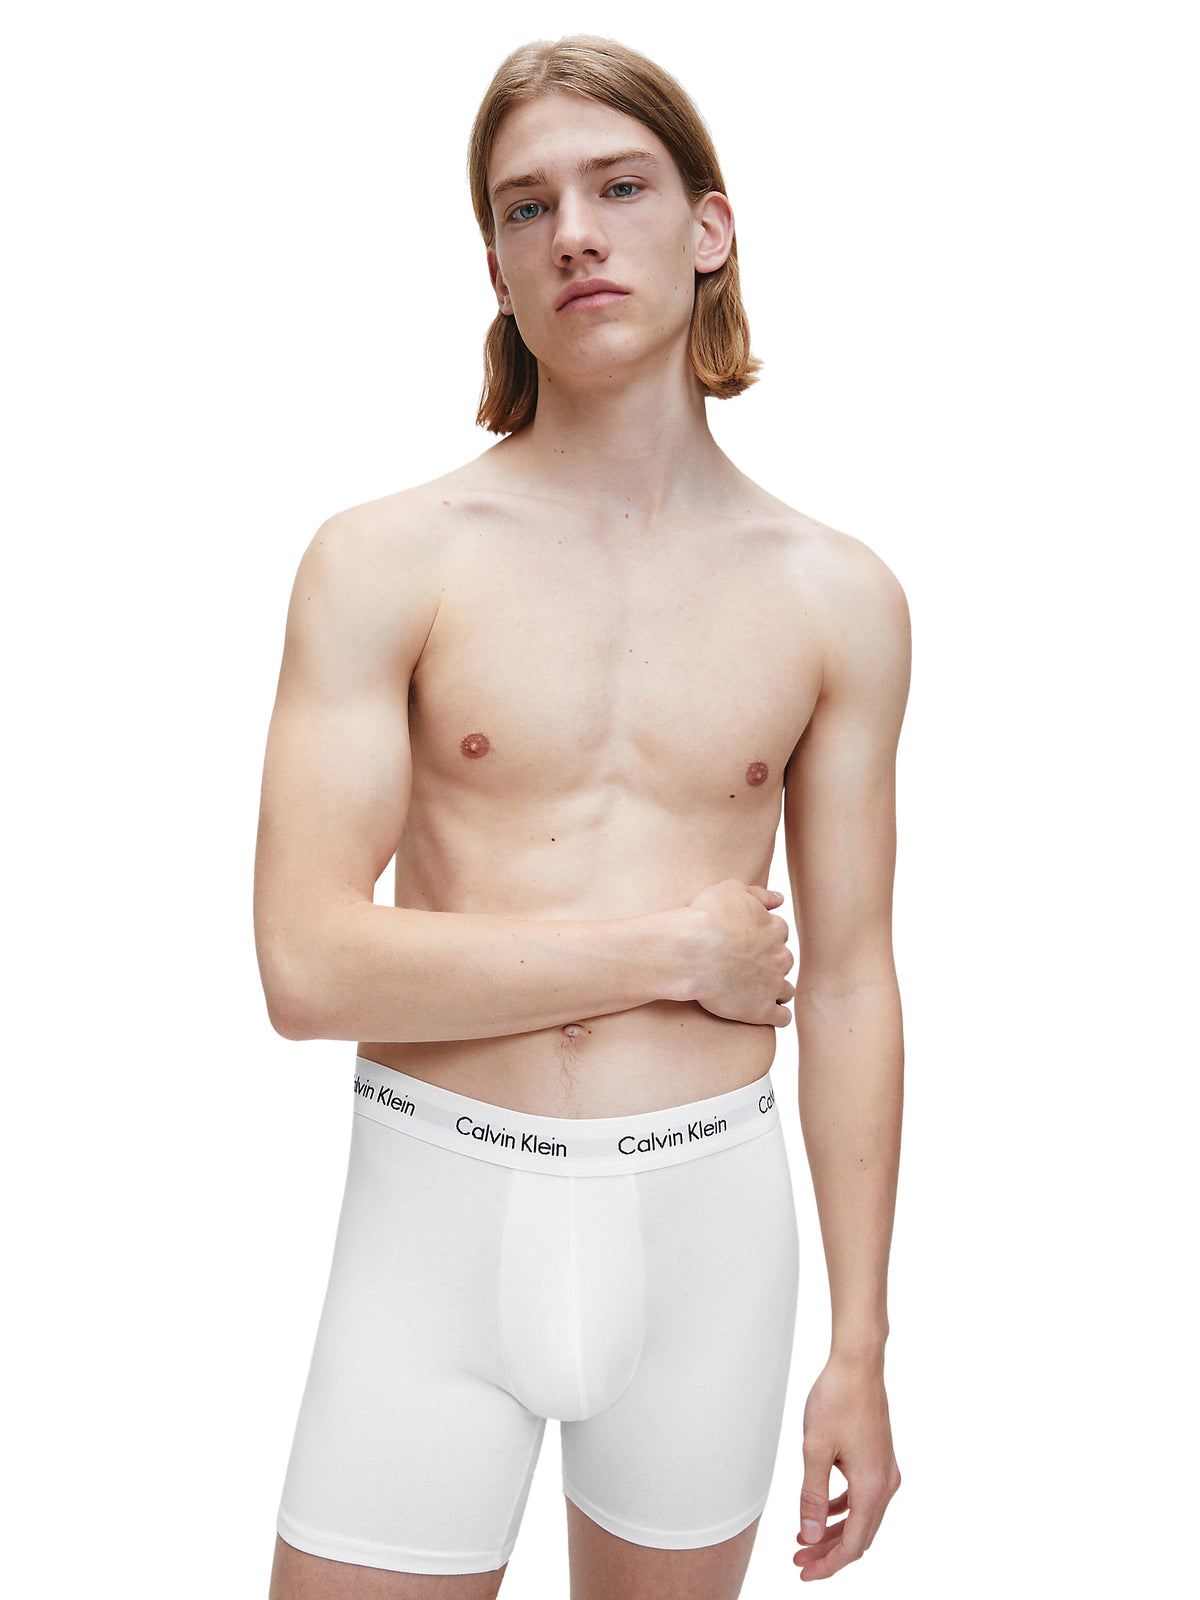 Calvin Klein Mens Boxer Briefs - Classic Fit (3-Pack), 03, Nb1770A, White